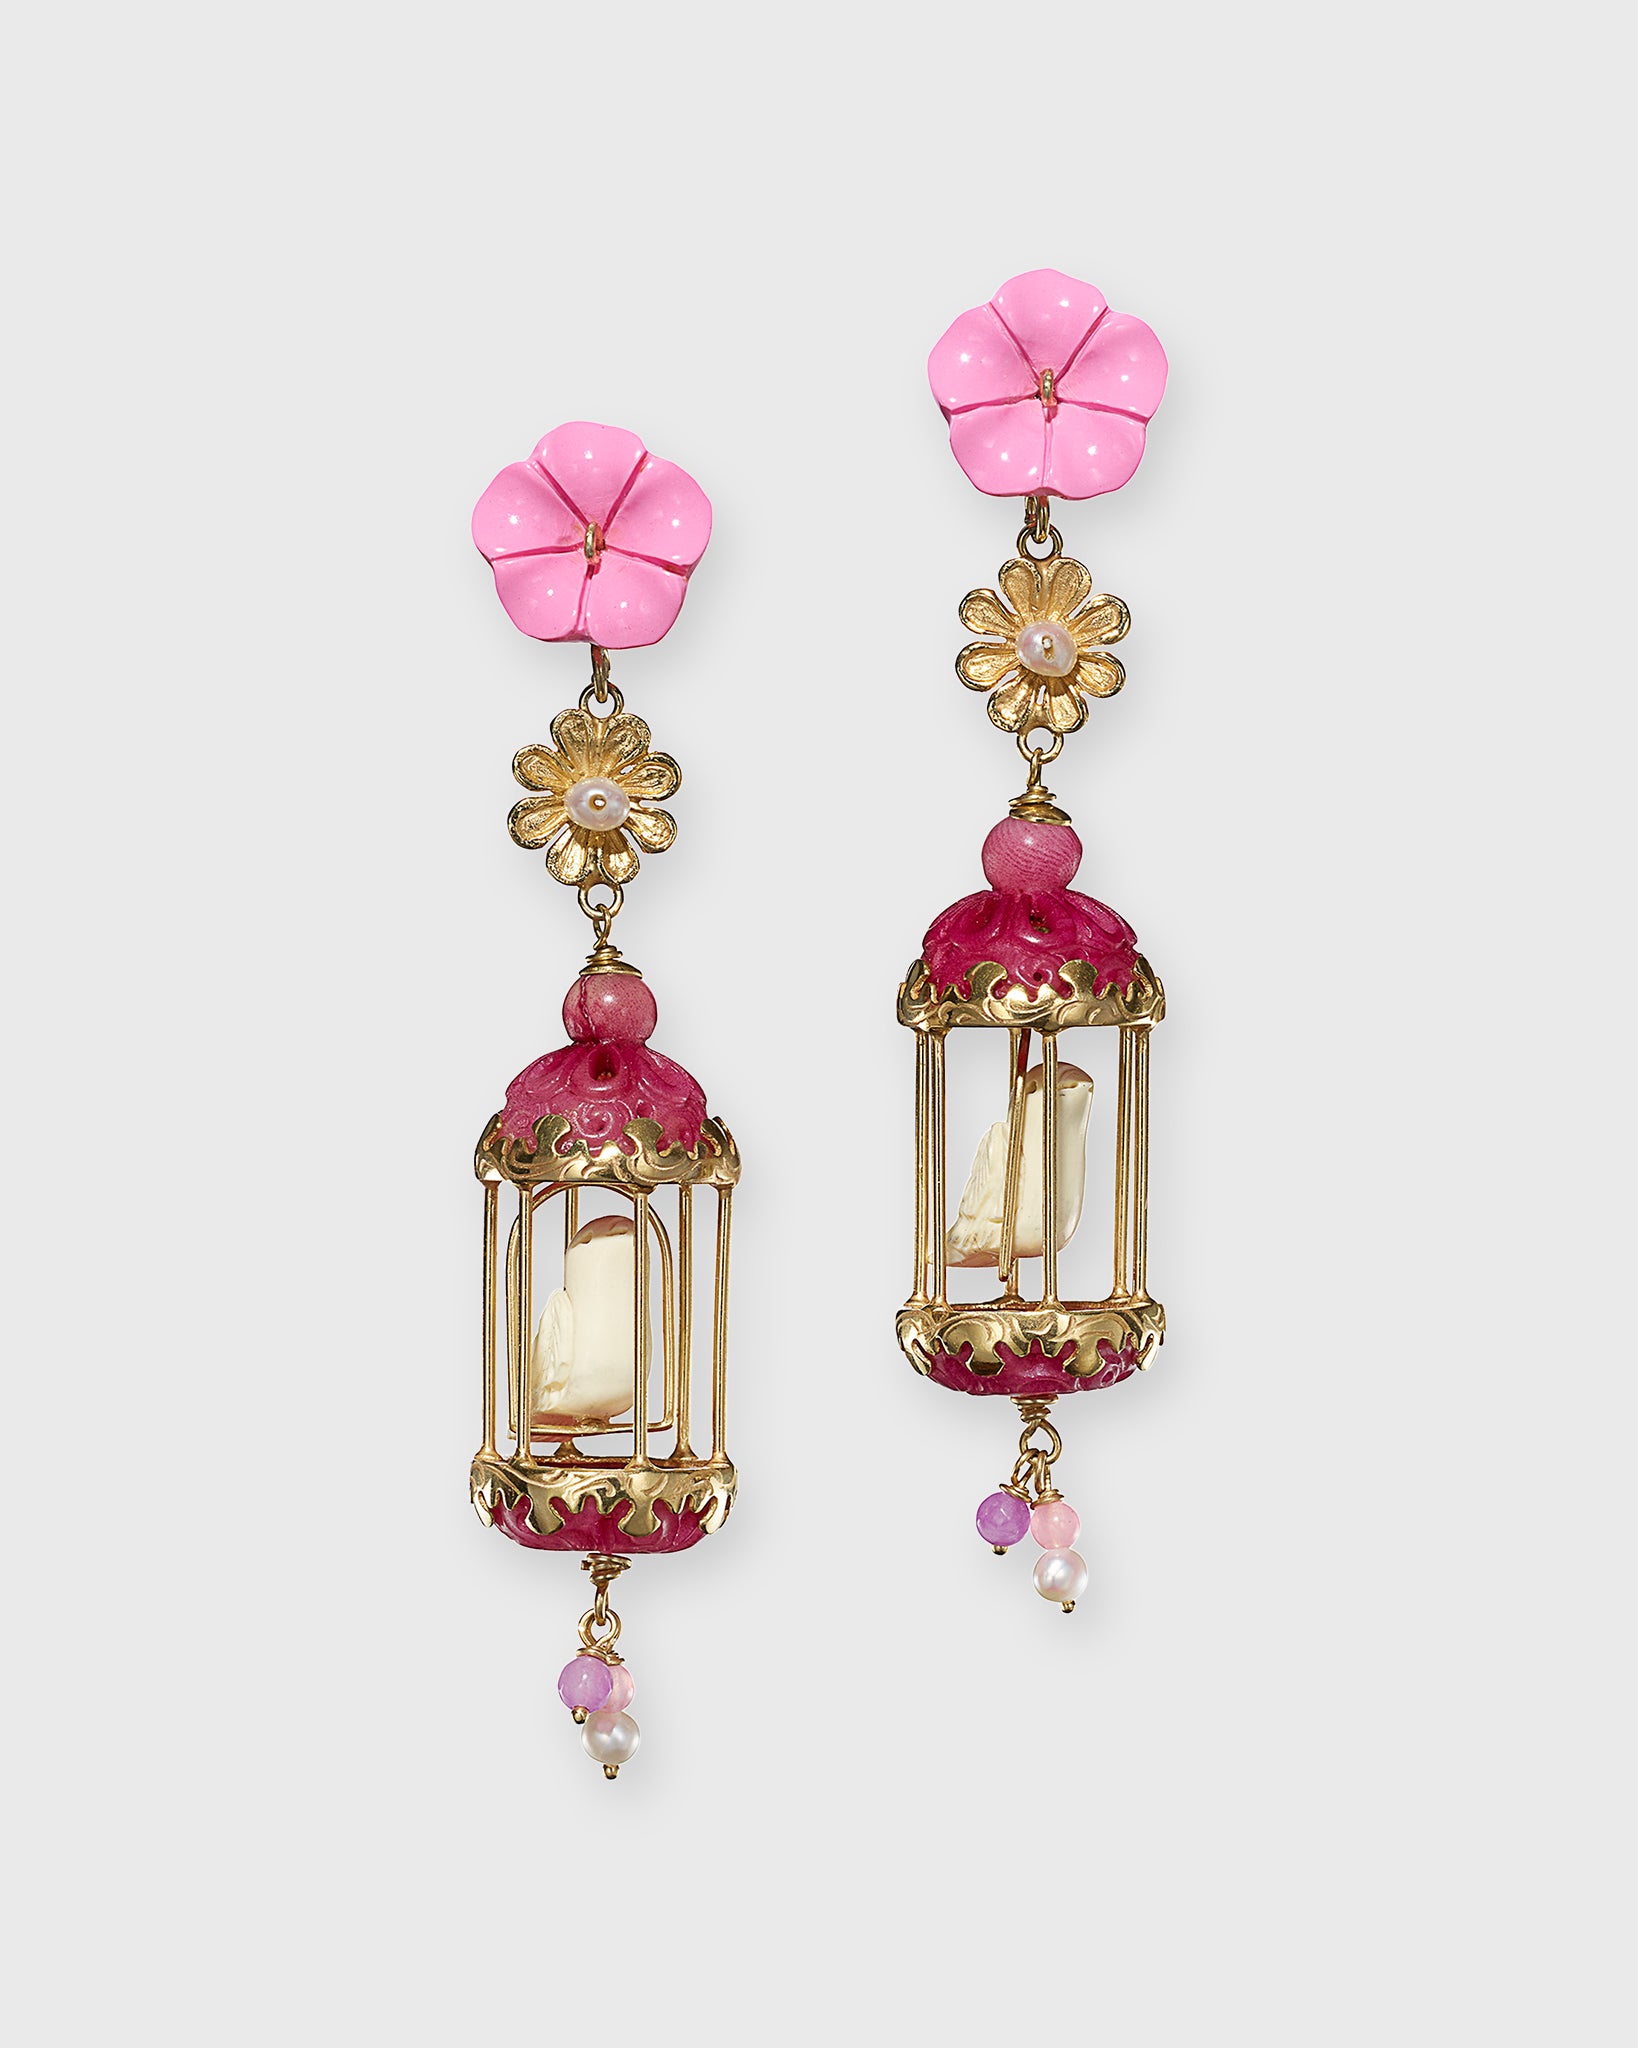 Aviary Classic Earrings in Gold/Bubble Pink/Fuchsia/White